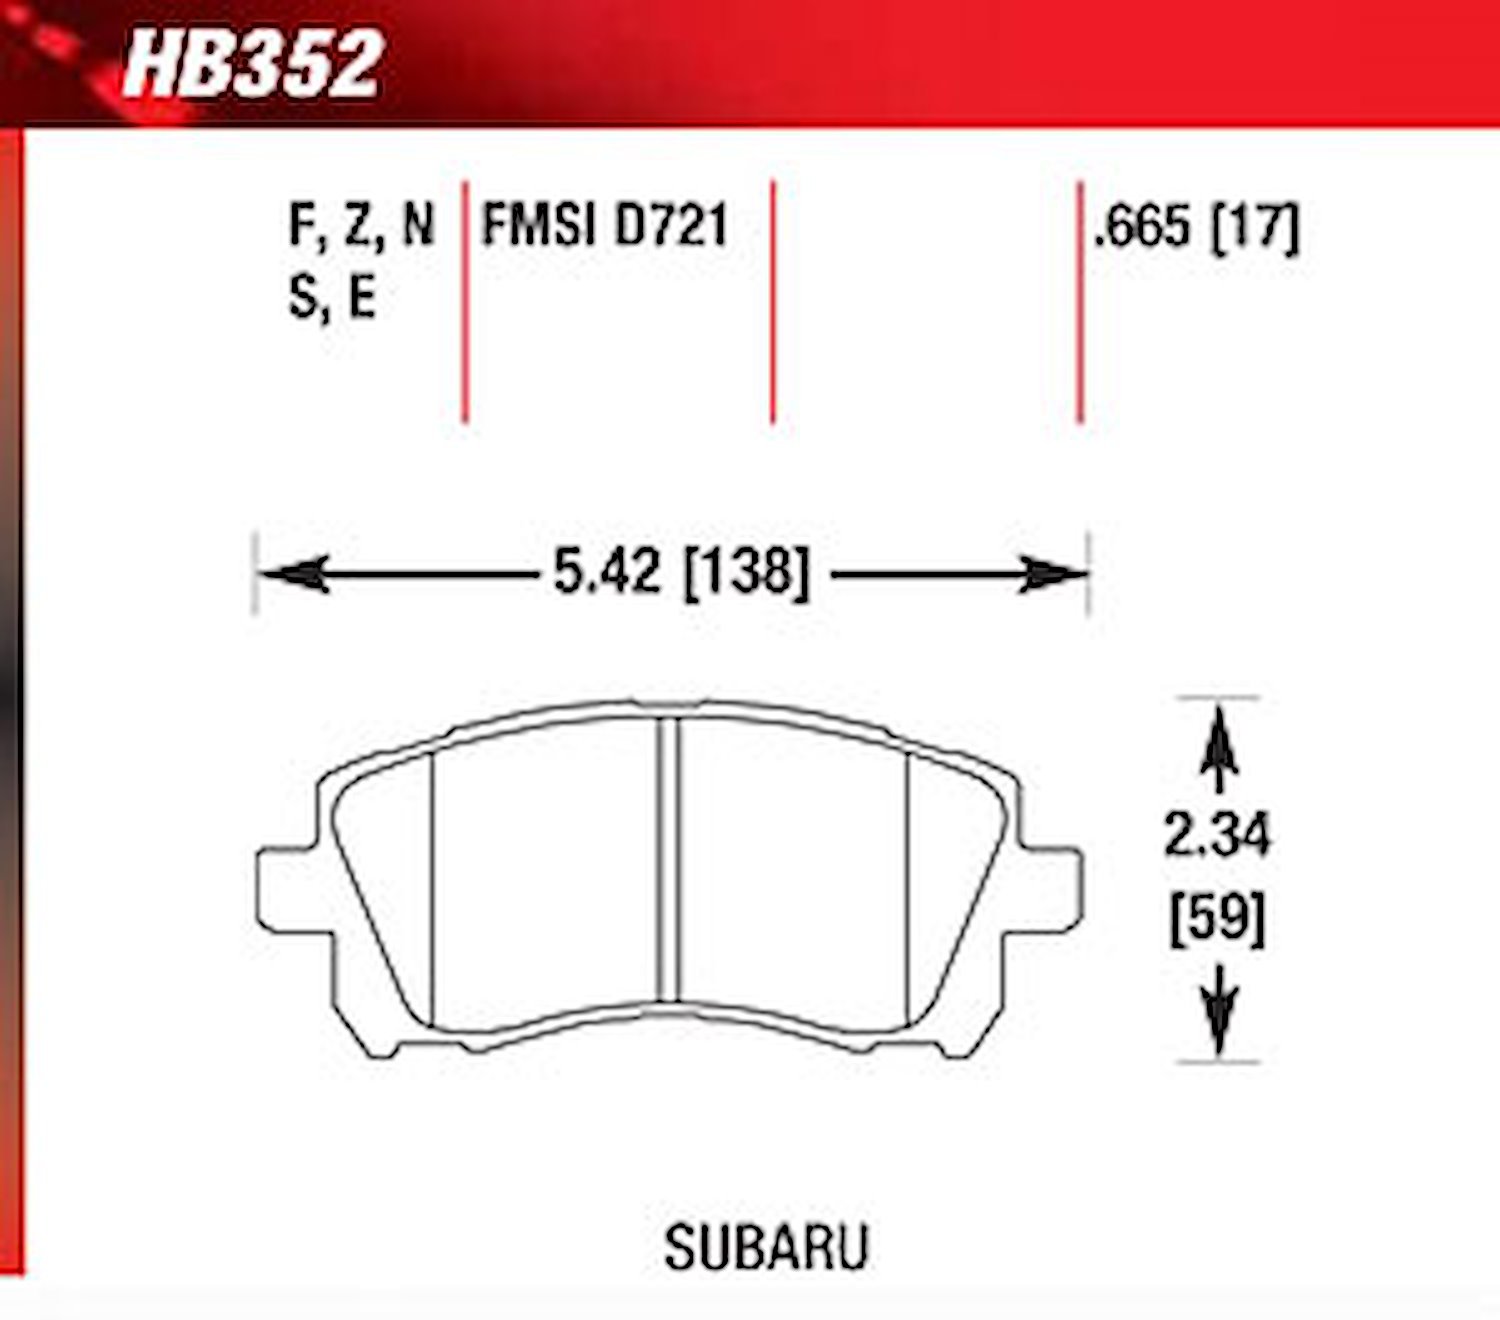 Blue 9012 Disk Brake Pads for Subaru Forester, Impreza, Legacy, Toyota